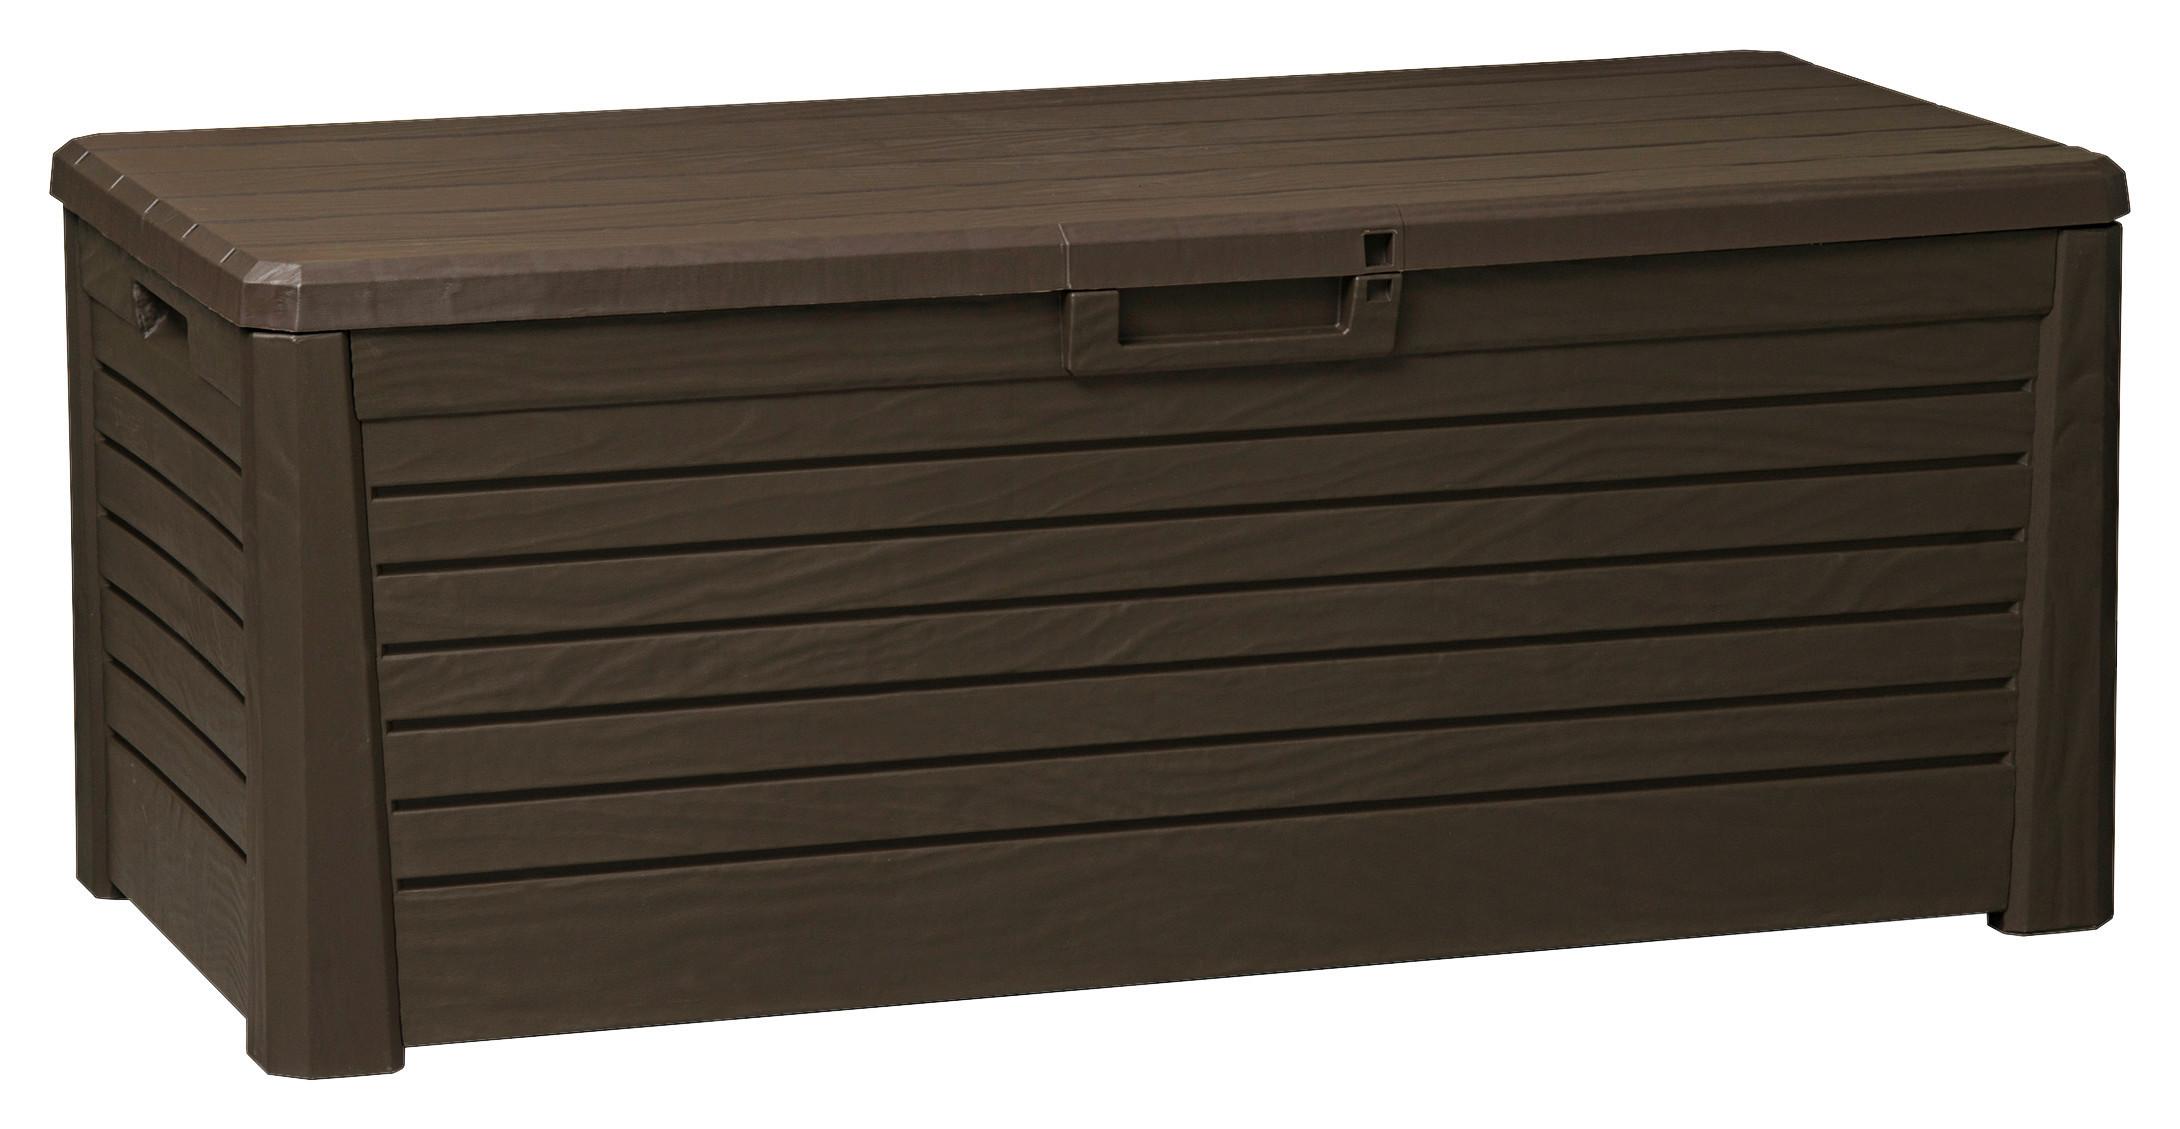 Kissenbox Wasserdicht Woody 148x60x72 cm, 550 L Braun - Braun, MODERN, Kunststoff (148/60/72cm)